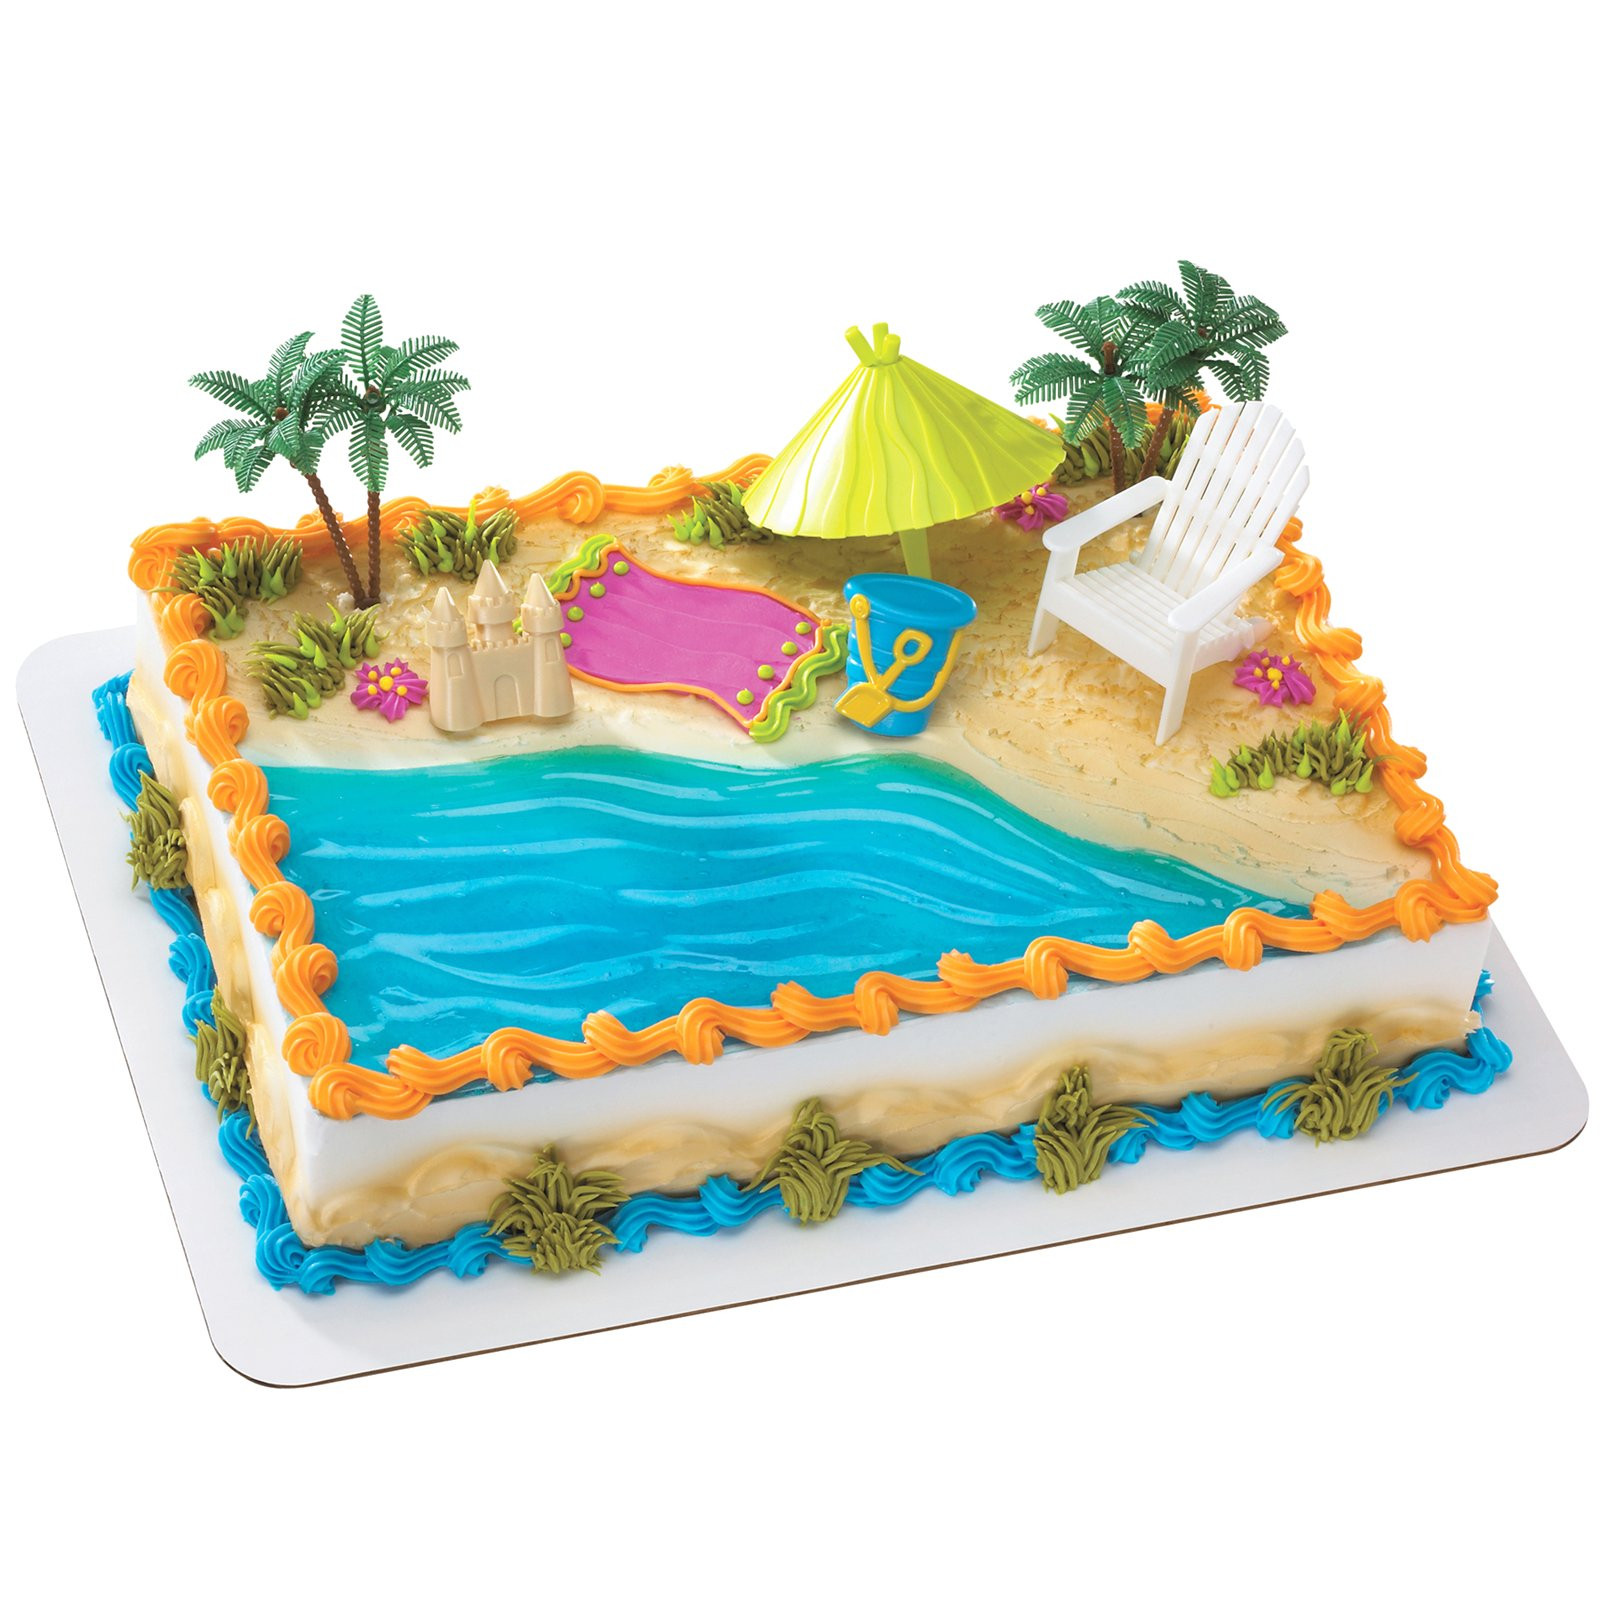 Beach Party Cake Ideas
 Celebrate Summer Birthdays with Birthdayexpress